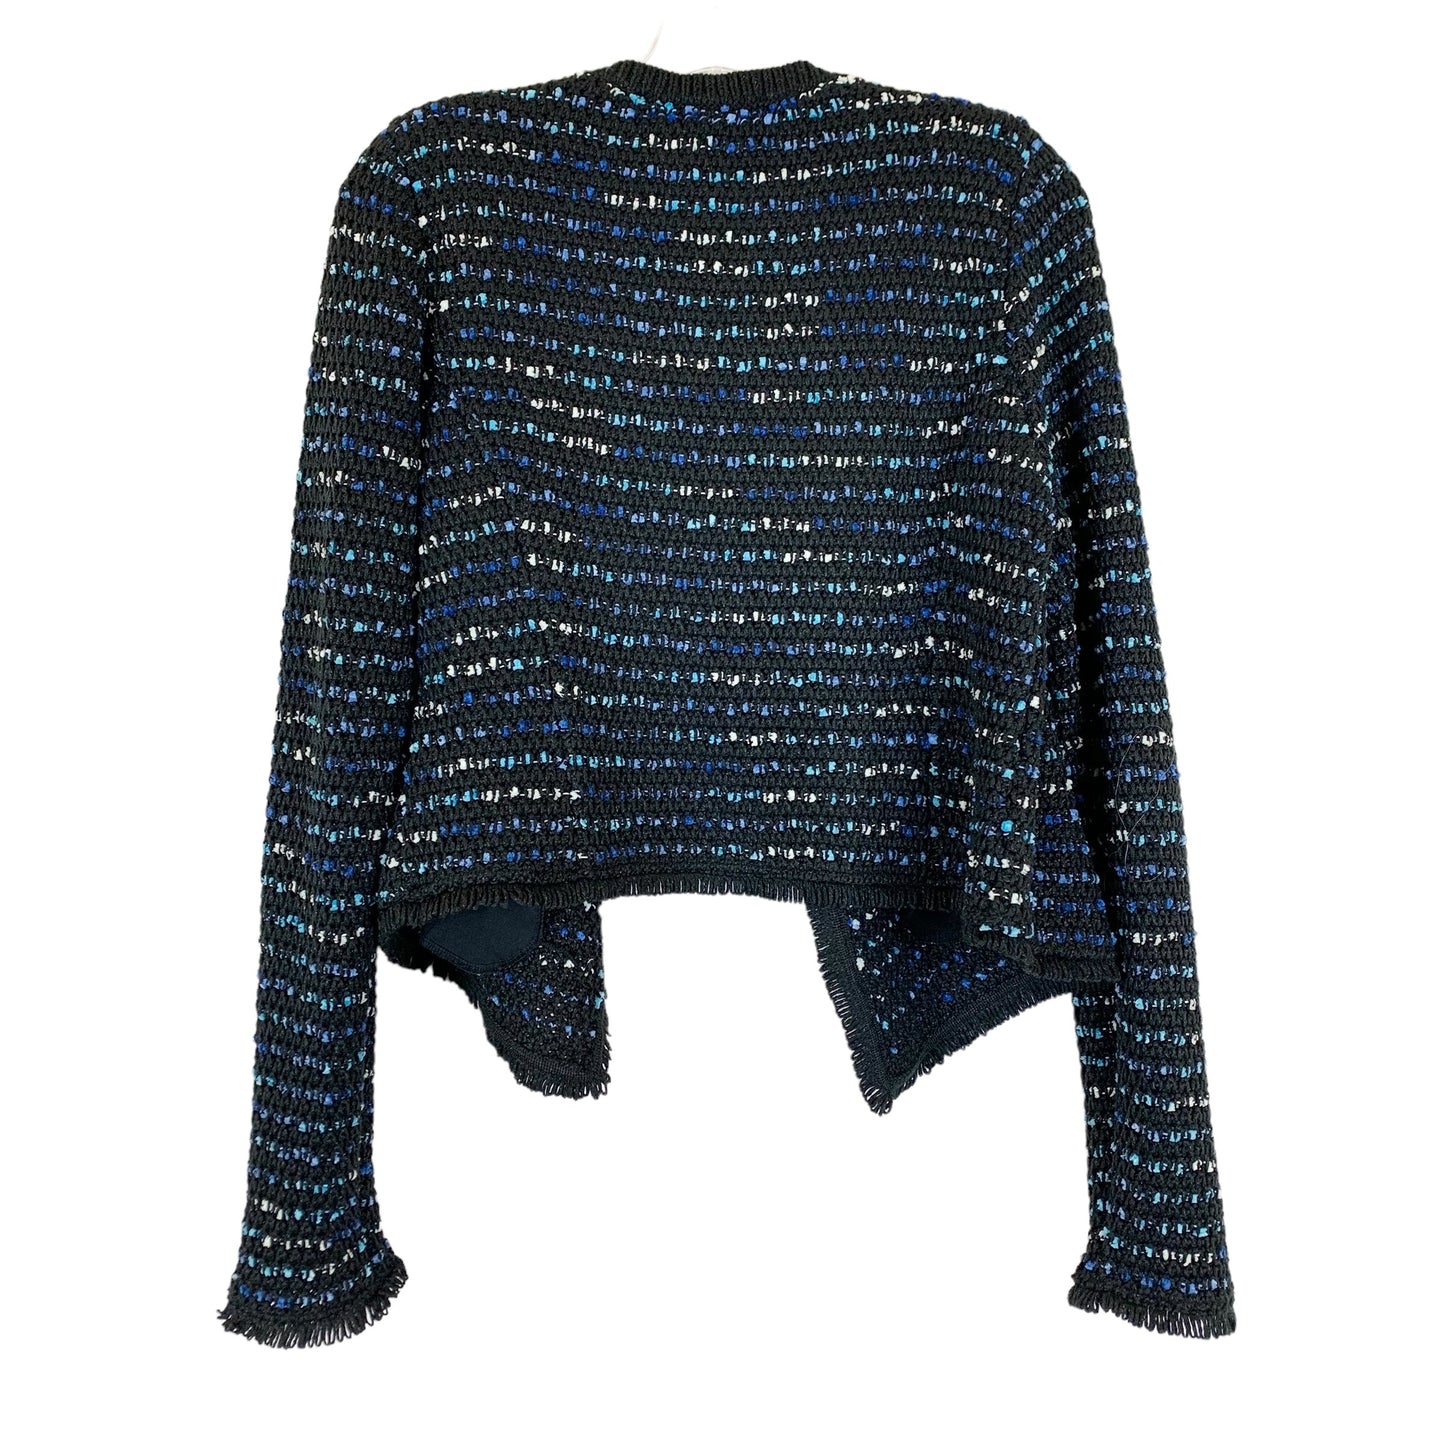 Sweater Cardigan By White House Black Market  Size: M